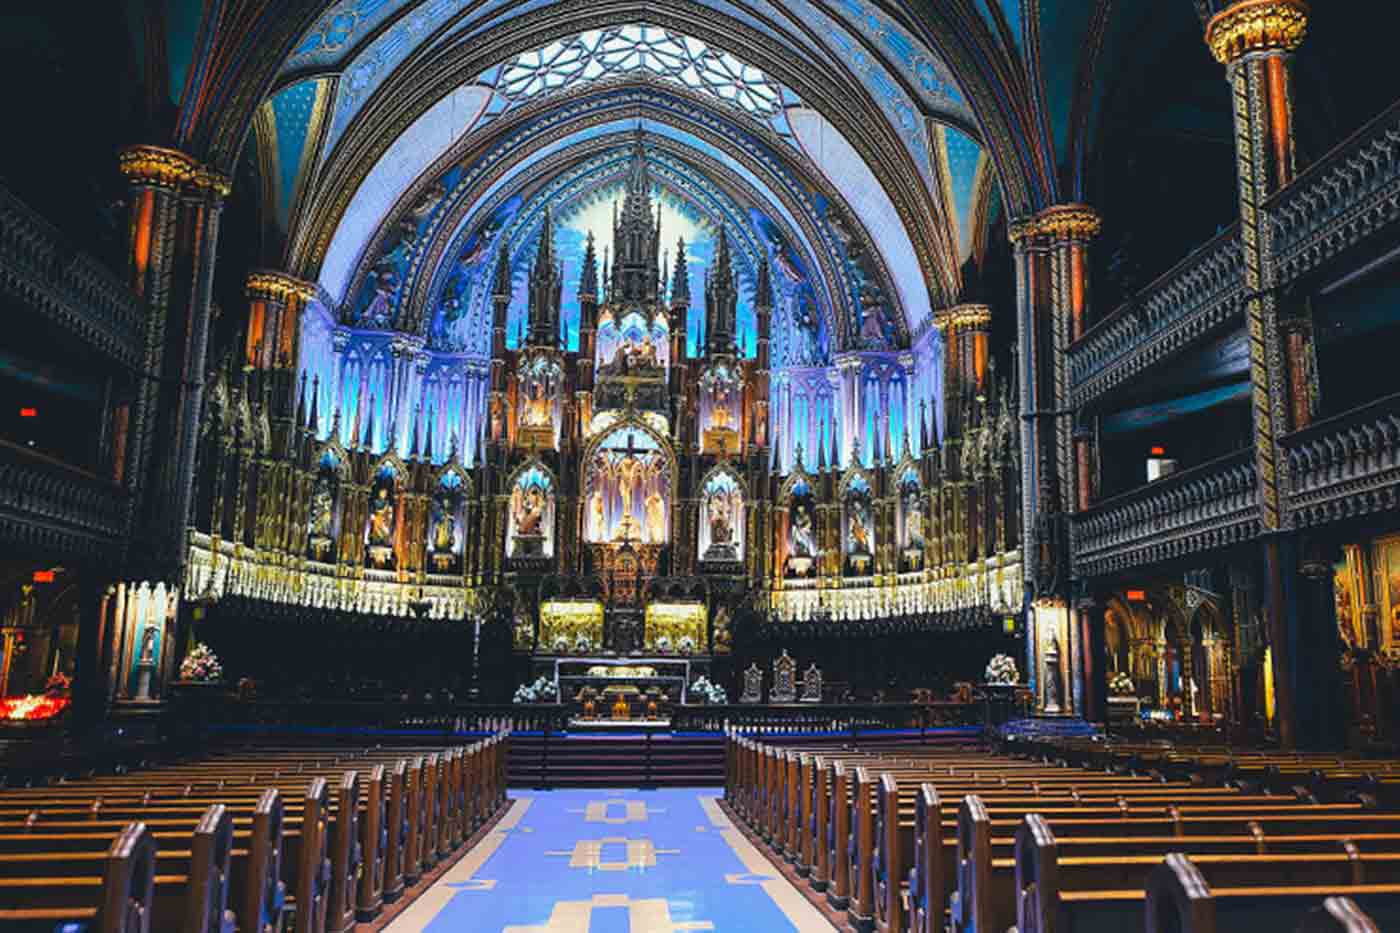 Inside Montreal's Notre Dame Basilica